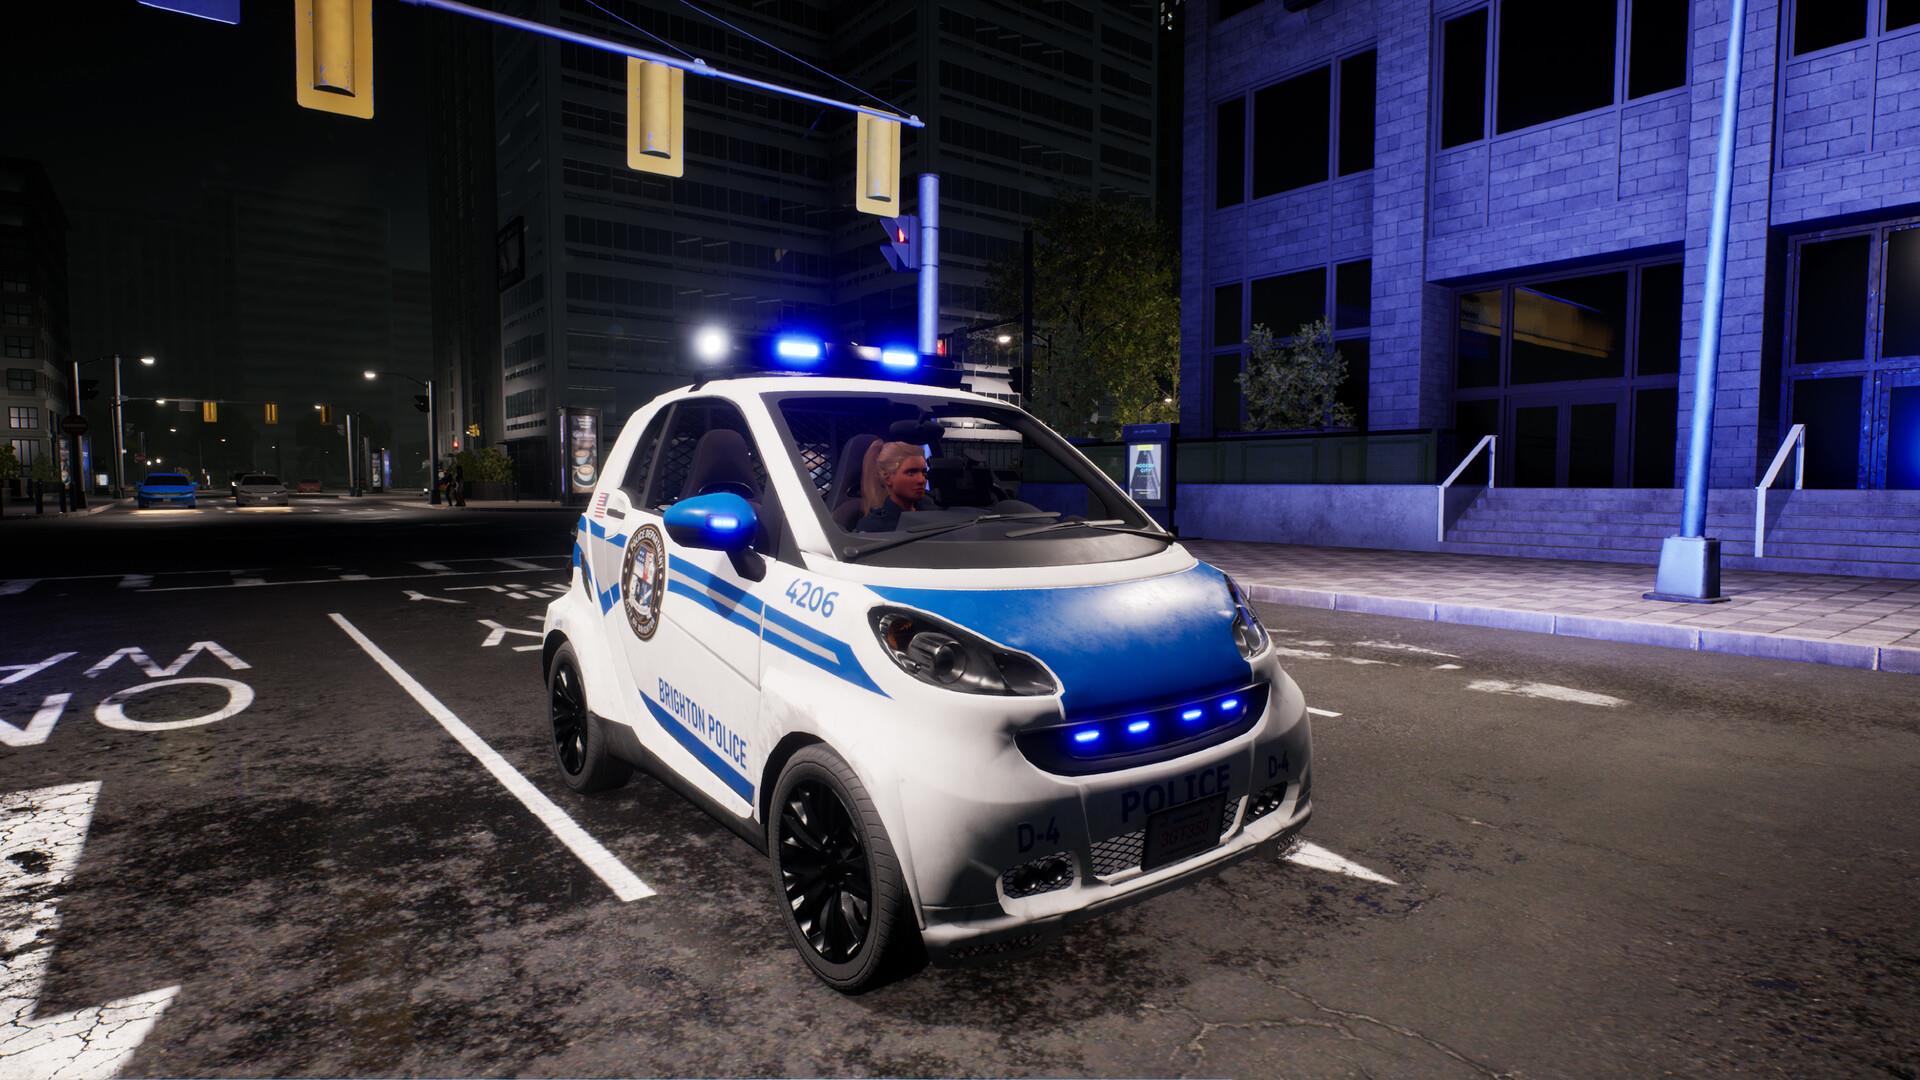 Police Patrol Simulator: Gaming getting - Nexus released keeps Article better, DLC new Officers